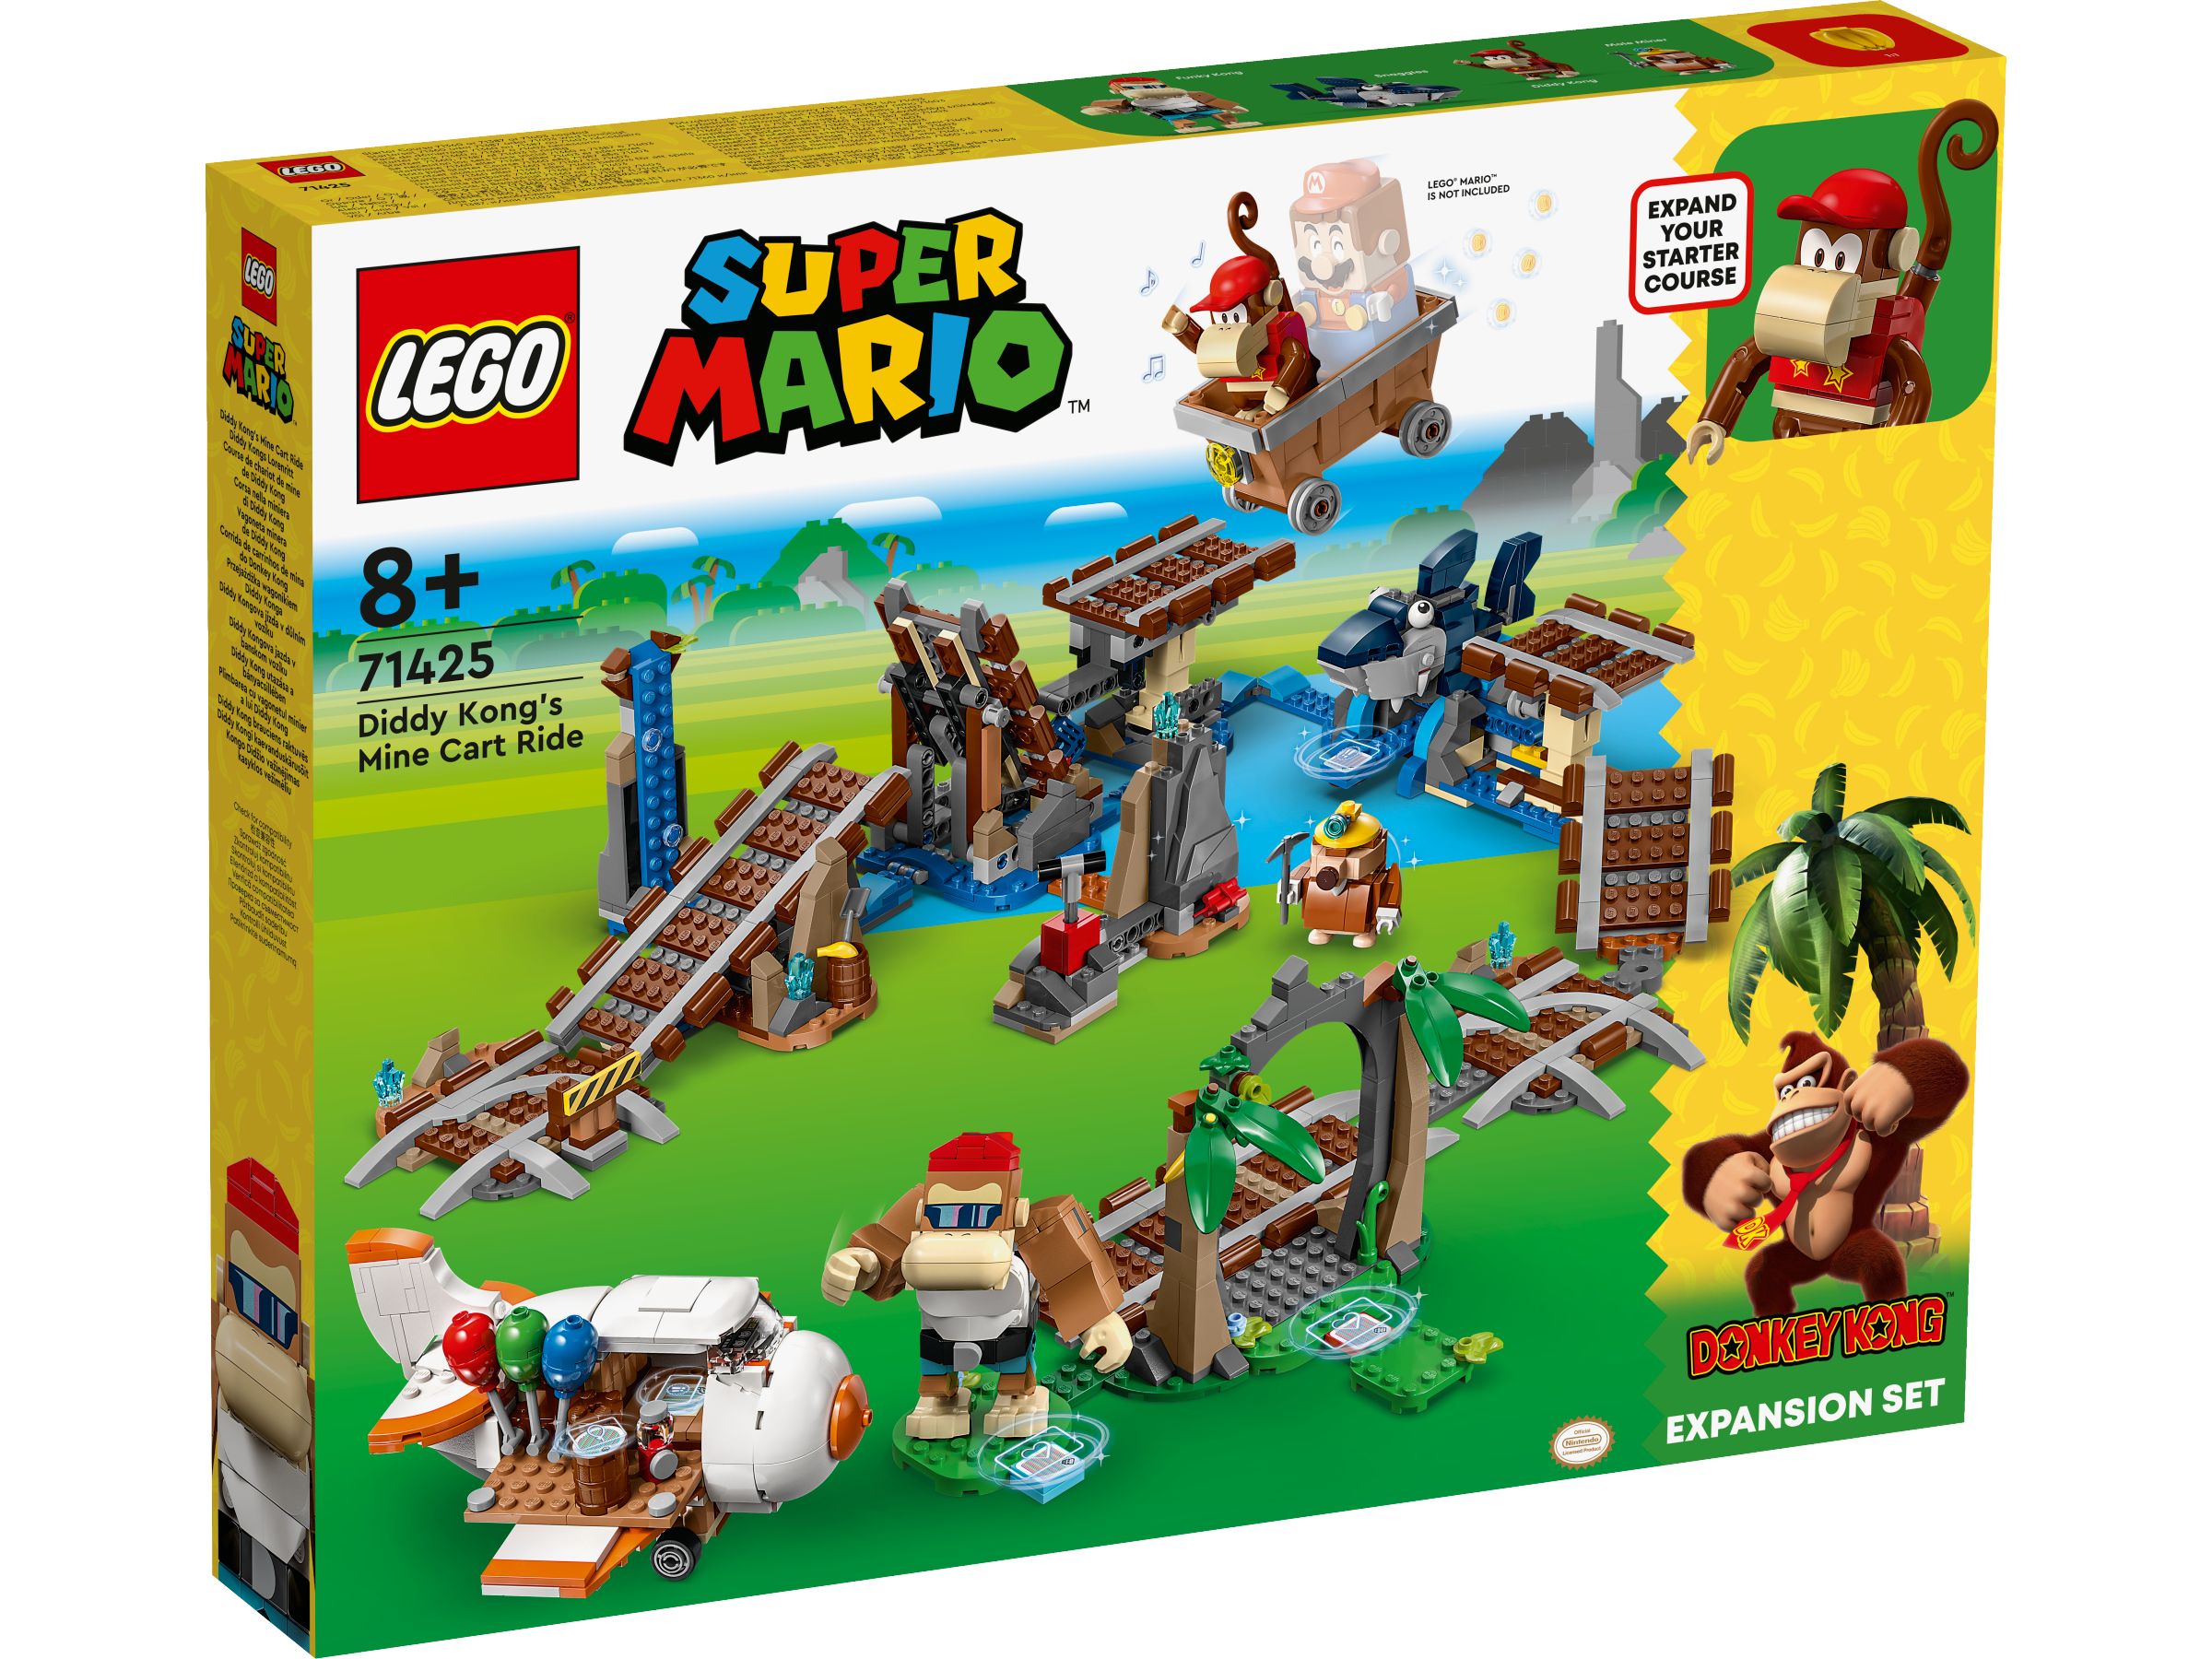 LEGO Super Mario 71425 Diddy Kongs Lorenritt – Erweiterungsset LEGO_71425_Box1_v29.jpg